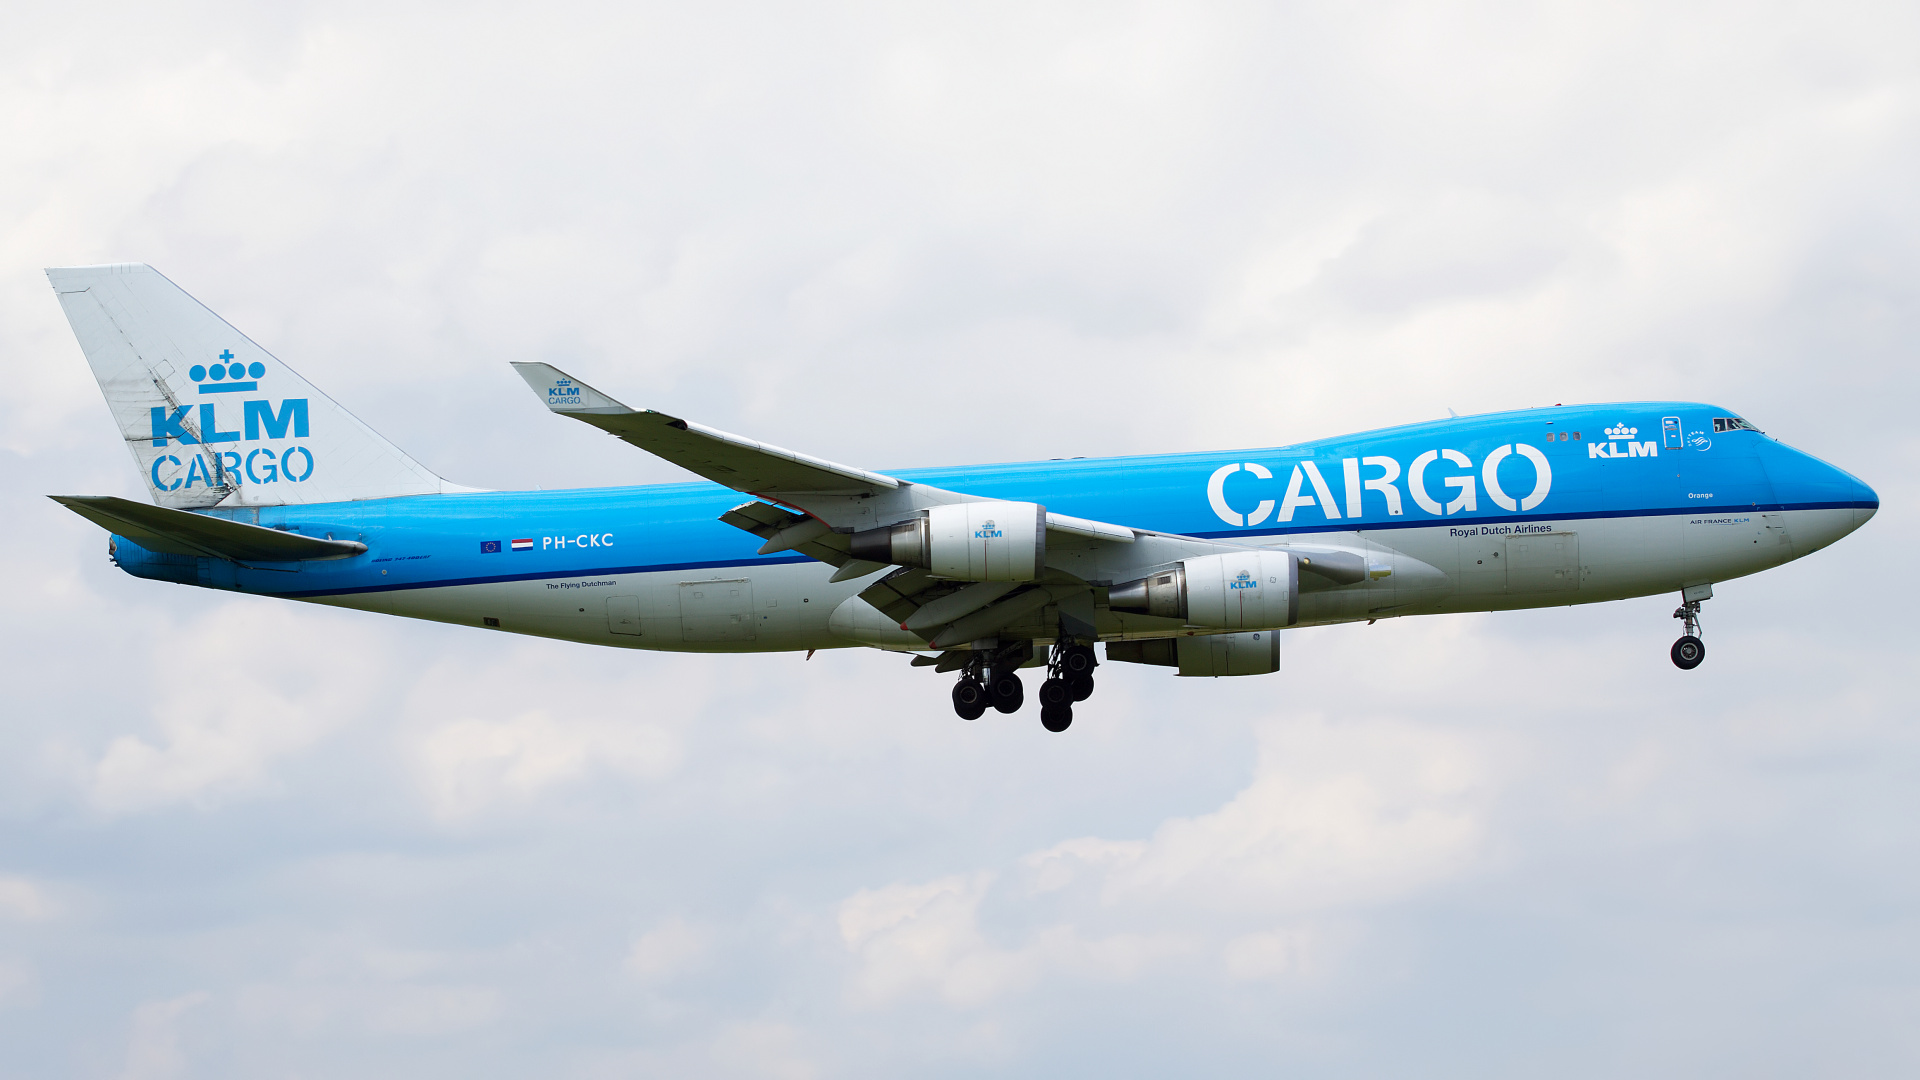 PH-CKC (Aircraft » Schiphol Spotting » Boeing 747-400F » KLM Cargo)